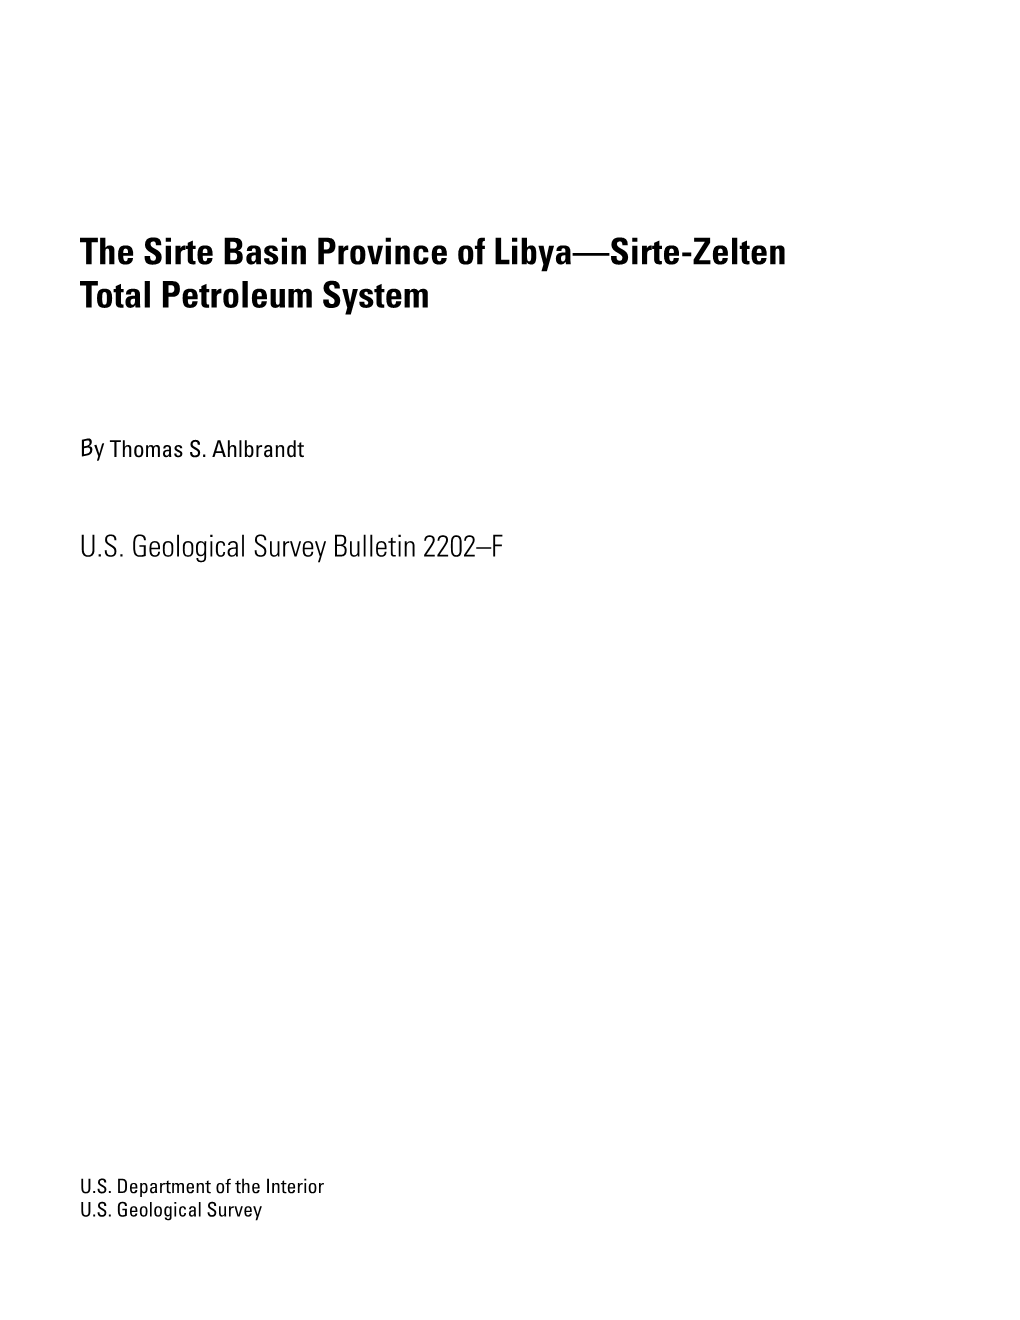 The Sirte Basin Province of Libya—Sirte-Zelten Total Petroleum System